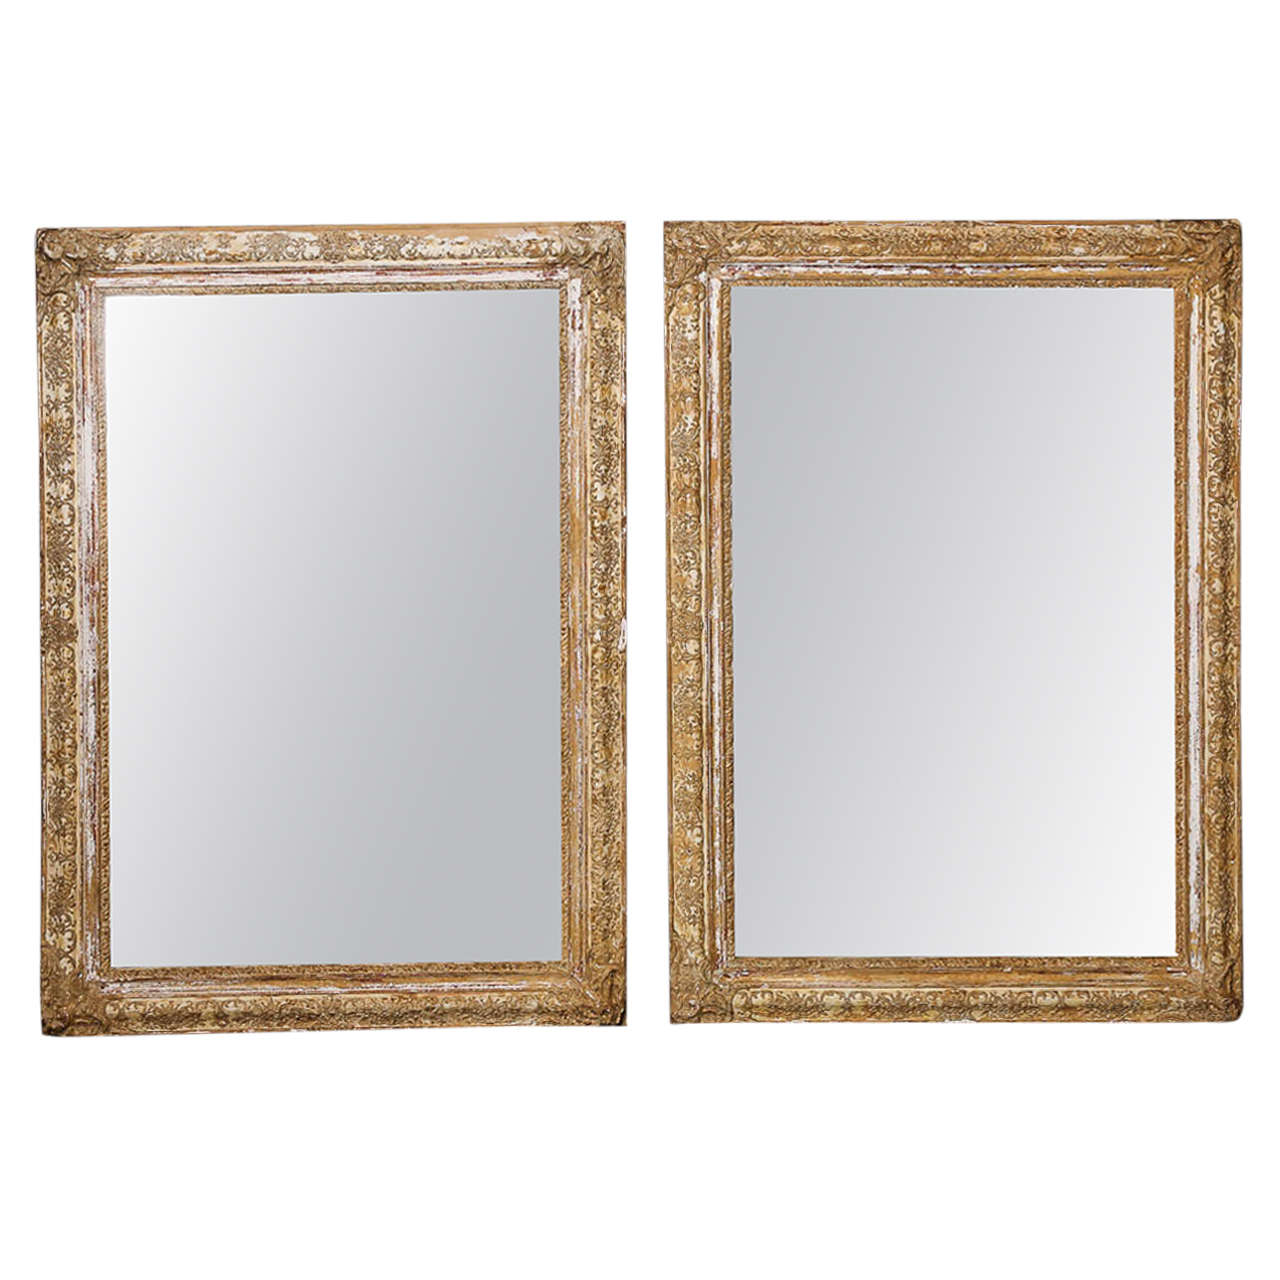 19th Century French Regency Style Mirror Frames